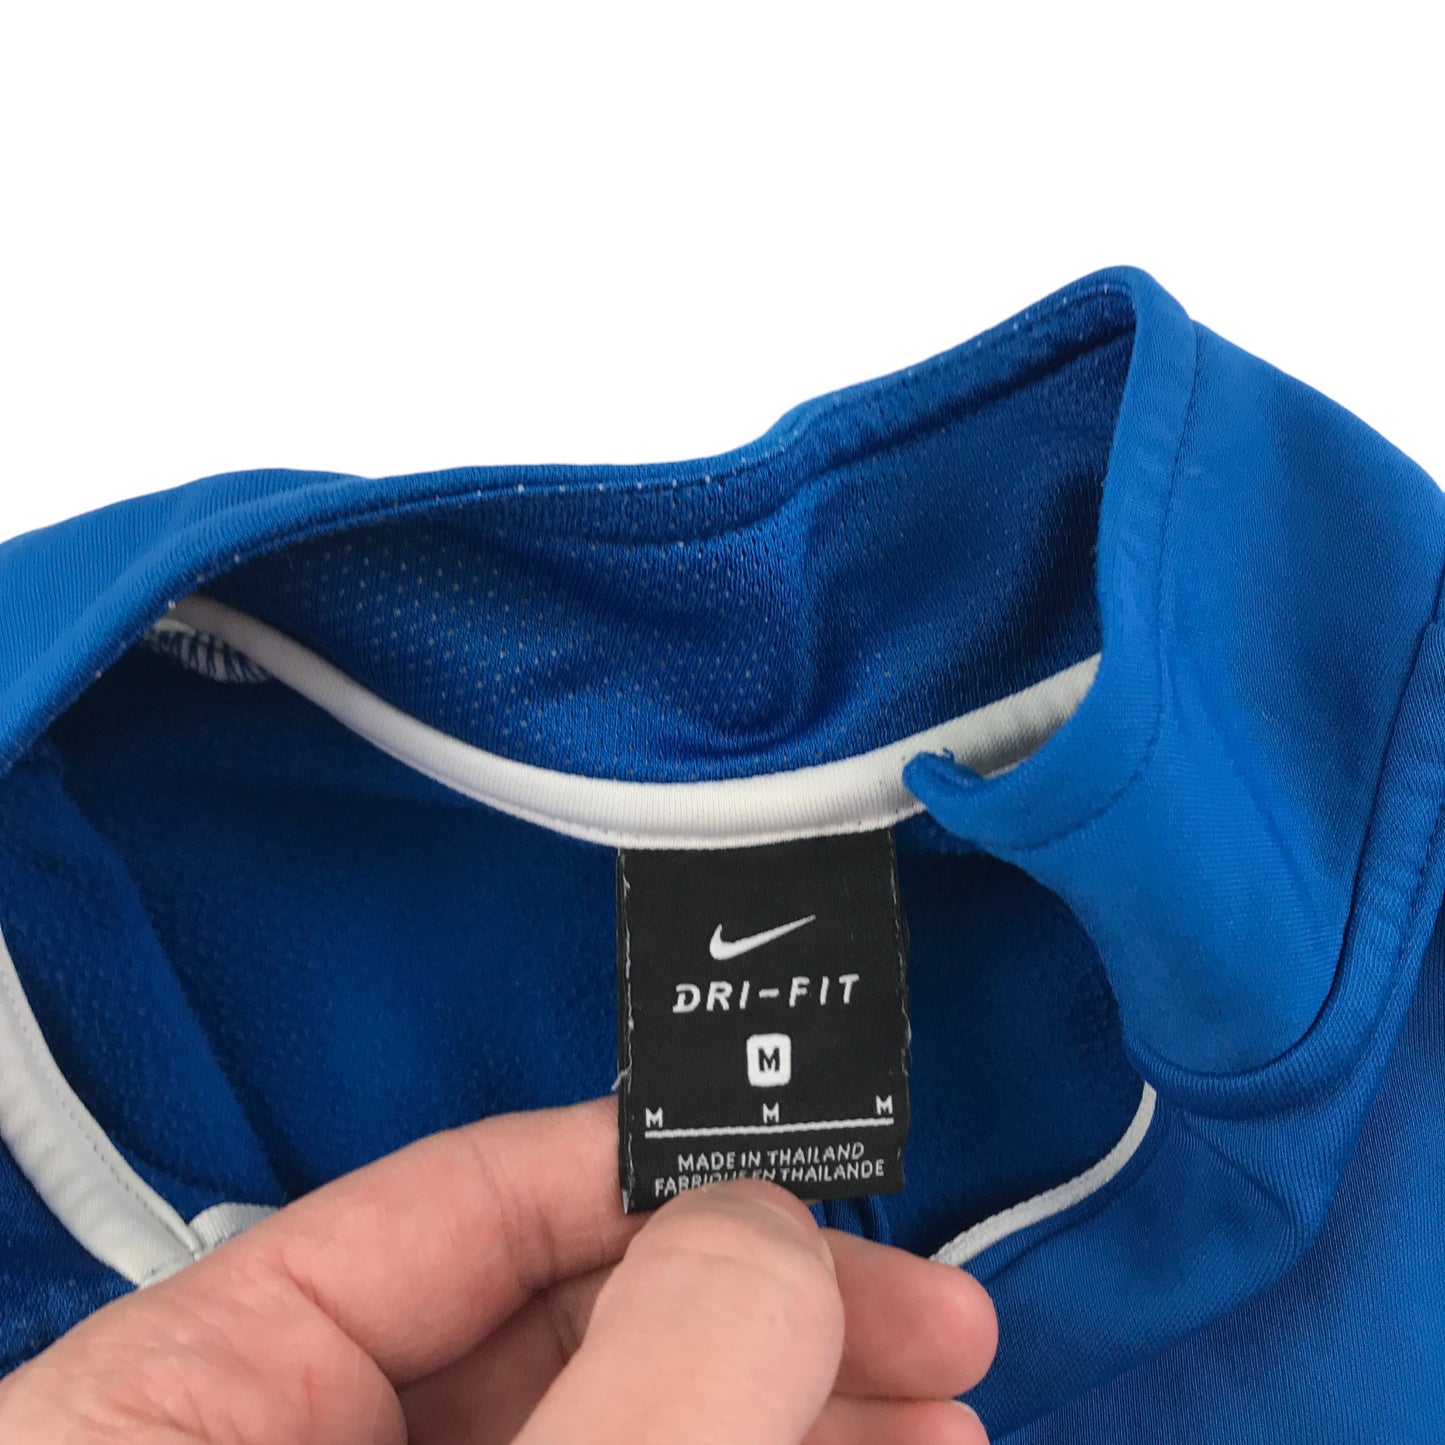 Nike Sweater Size M Royal Blue Long Sleeve Half Zipper